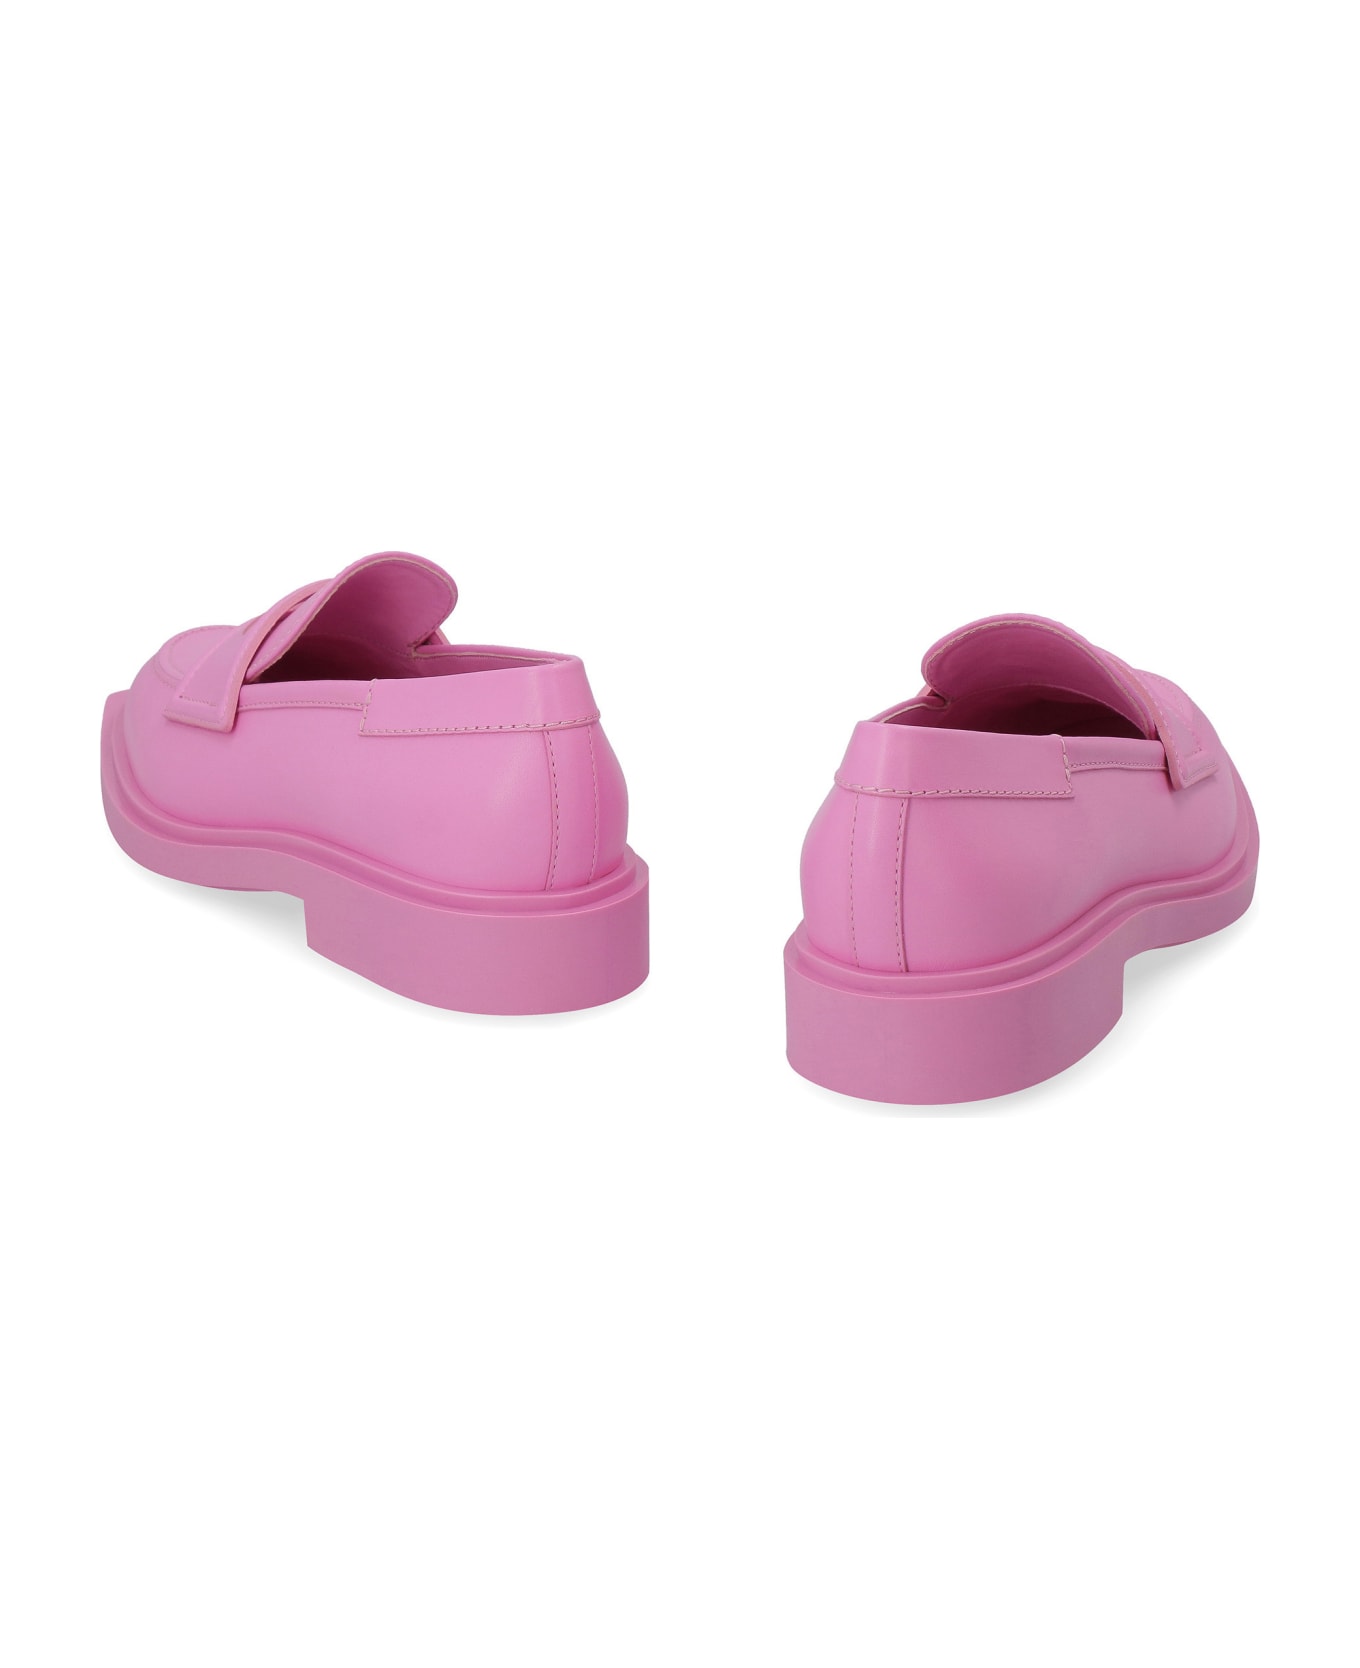 3JUIN Viola Leather Loafers - Pink